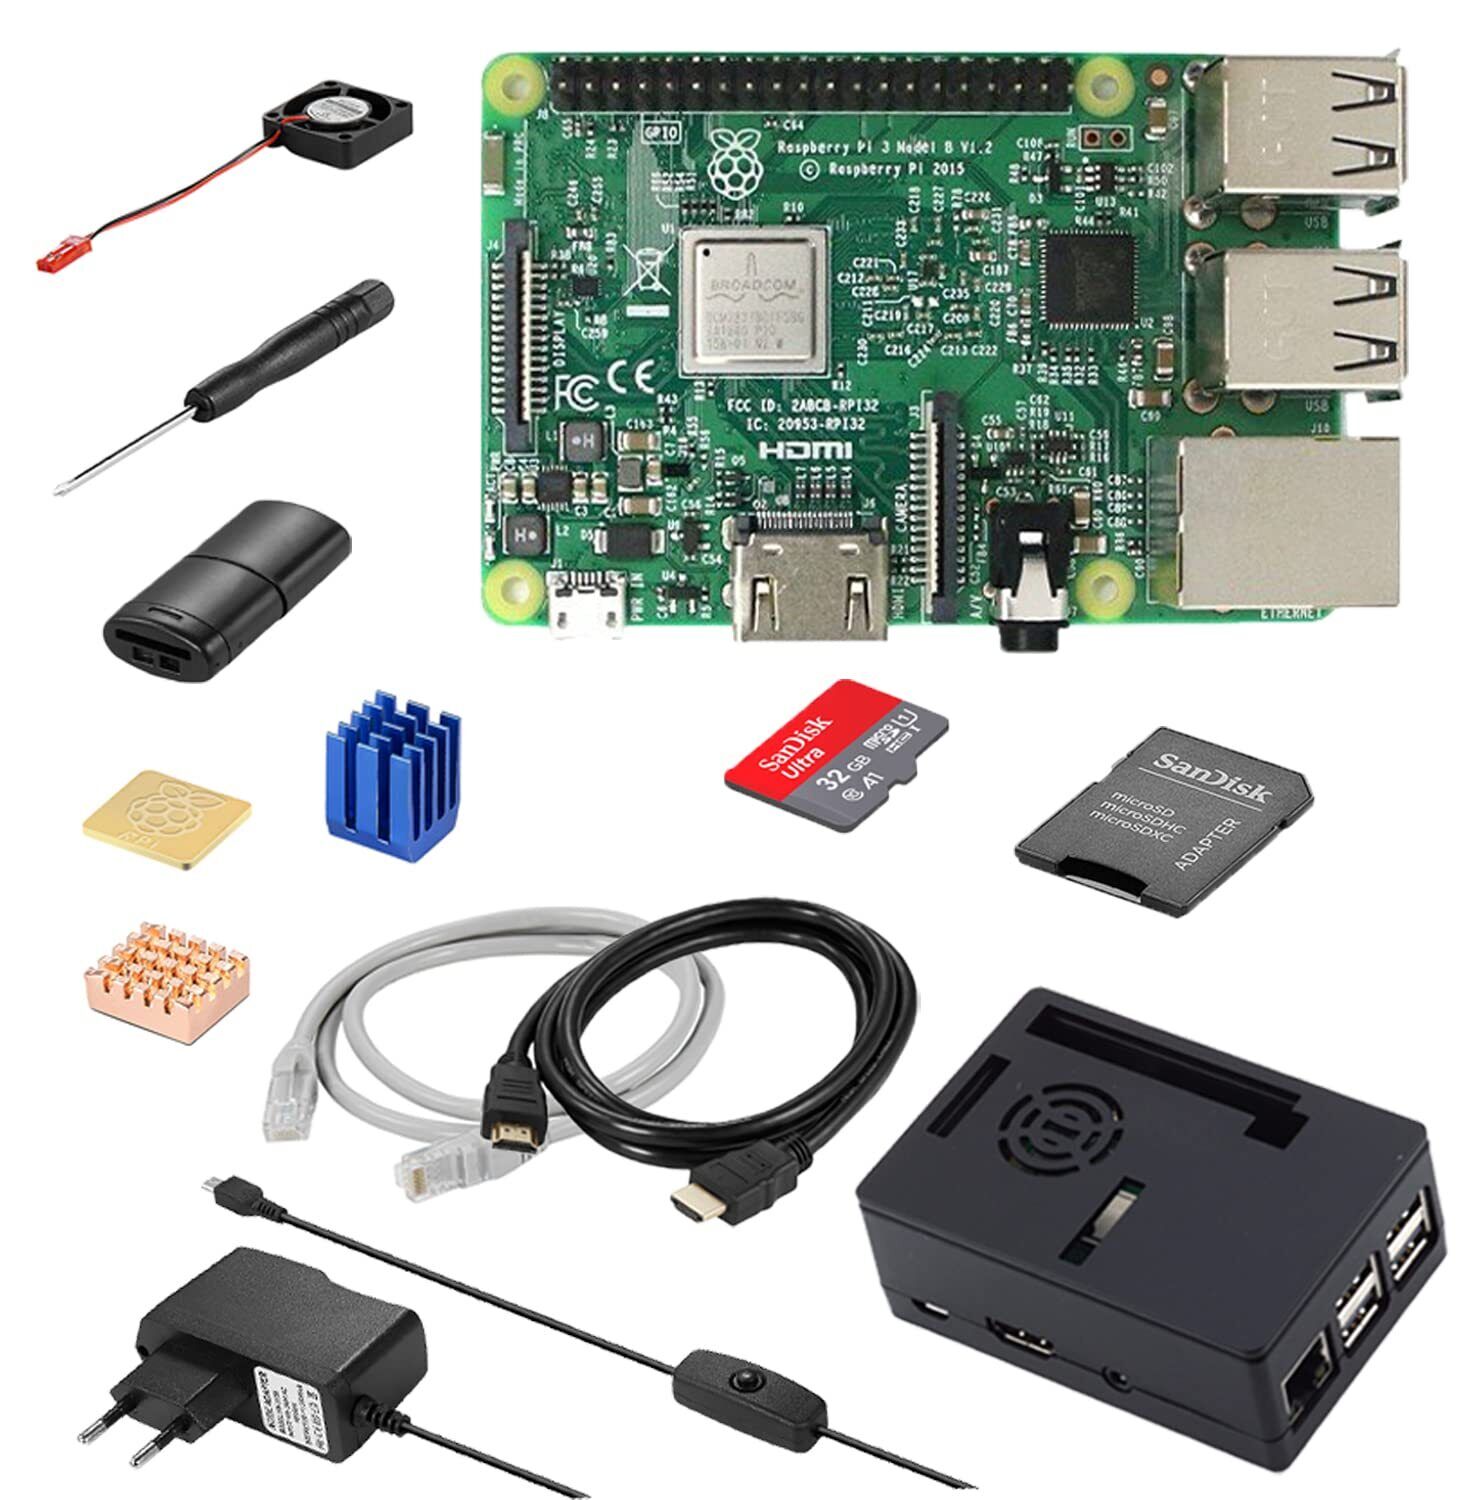 RasTech Raspberry Pi 3 Model B Starter Kit with 32GB Micro SD Card HDMI Cable...